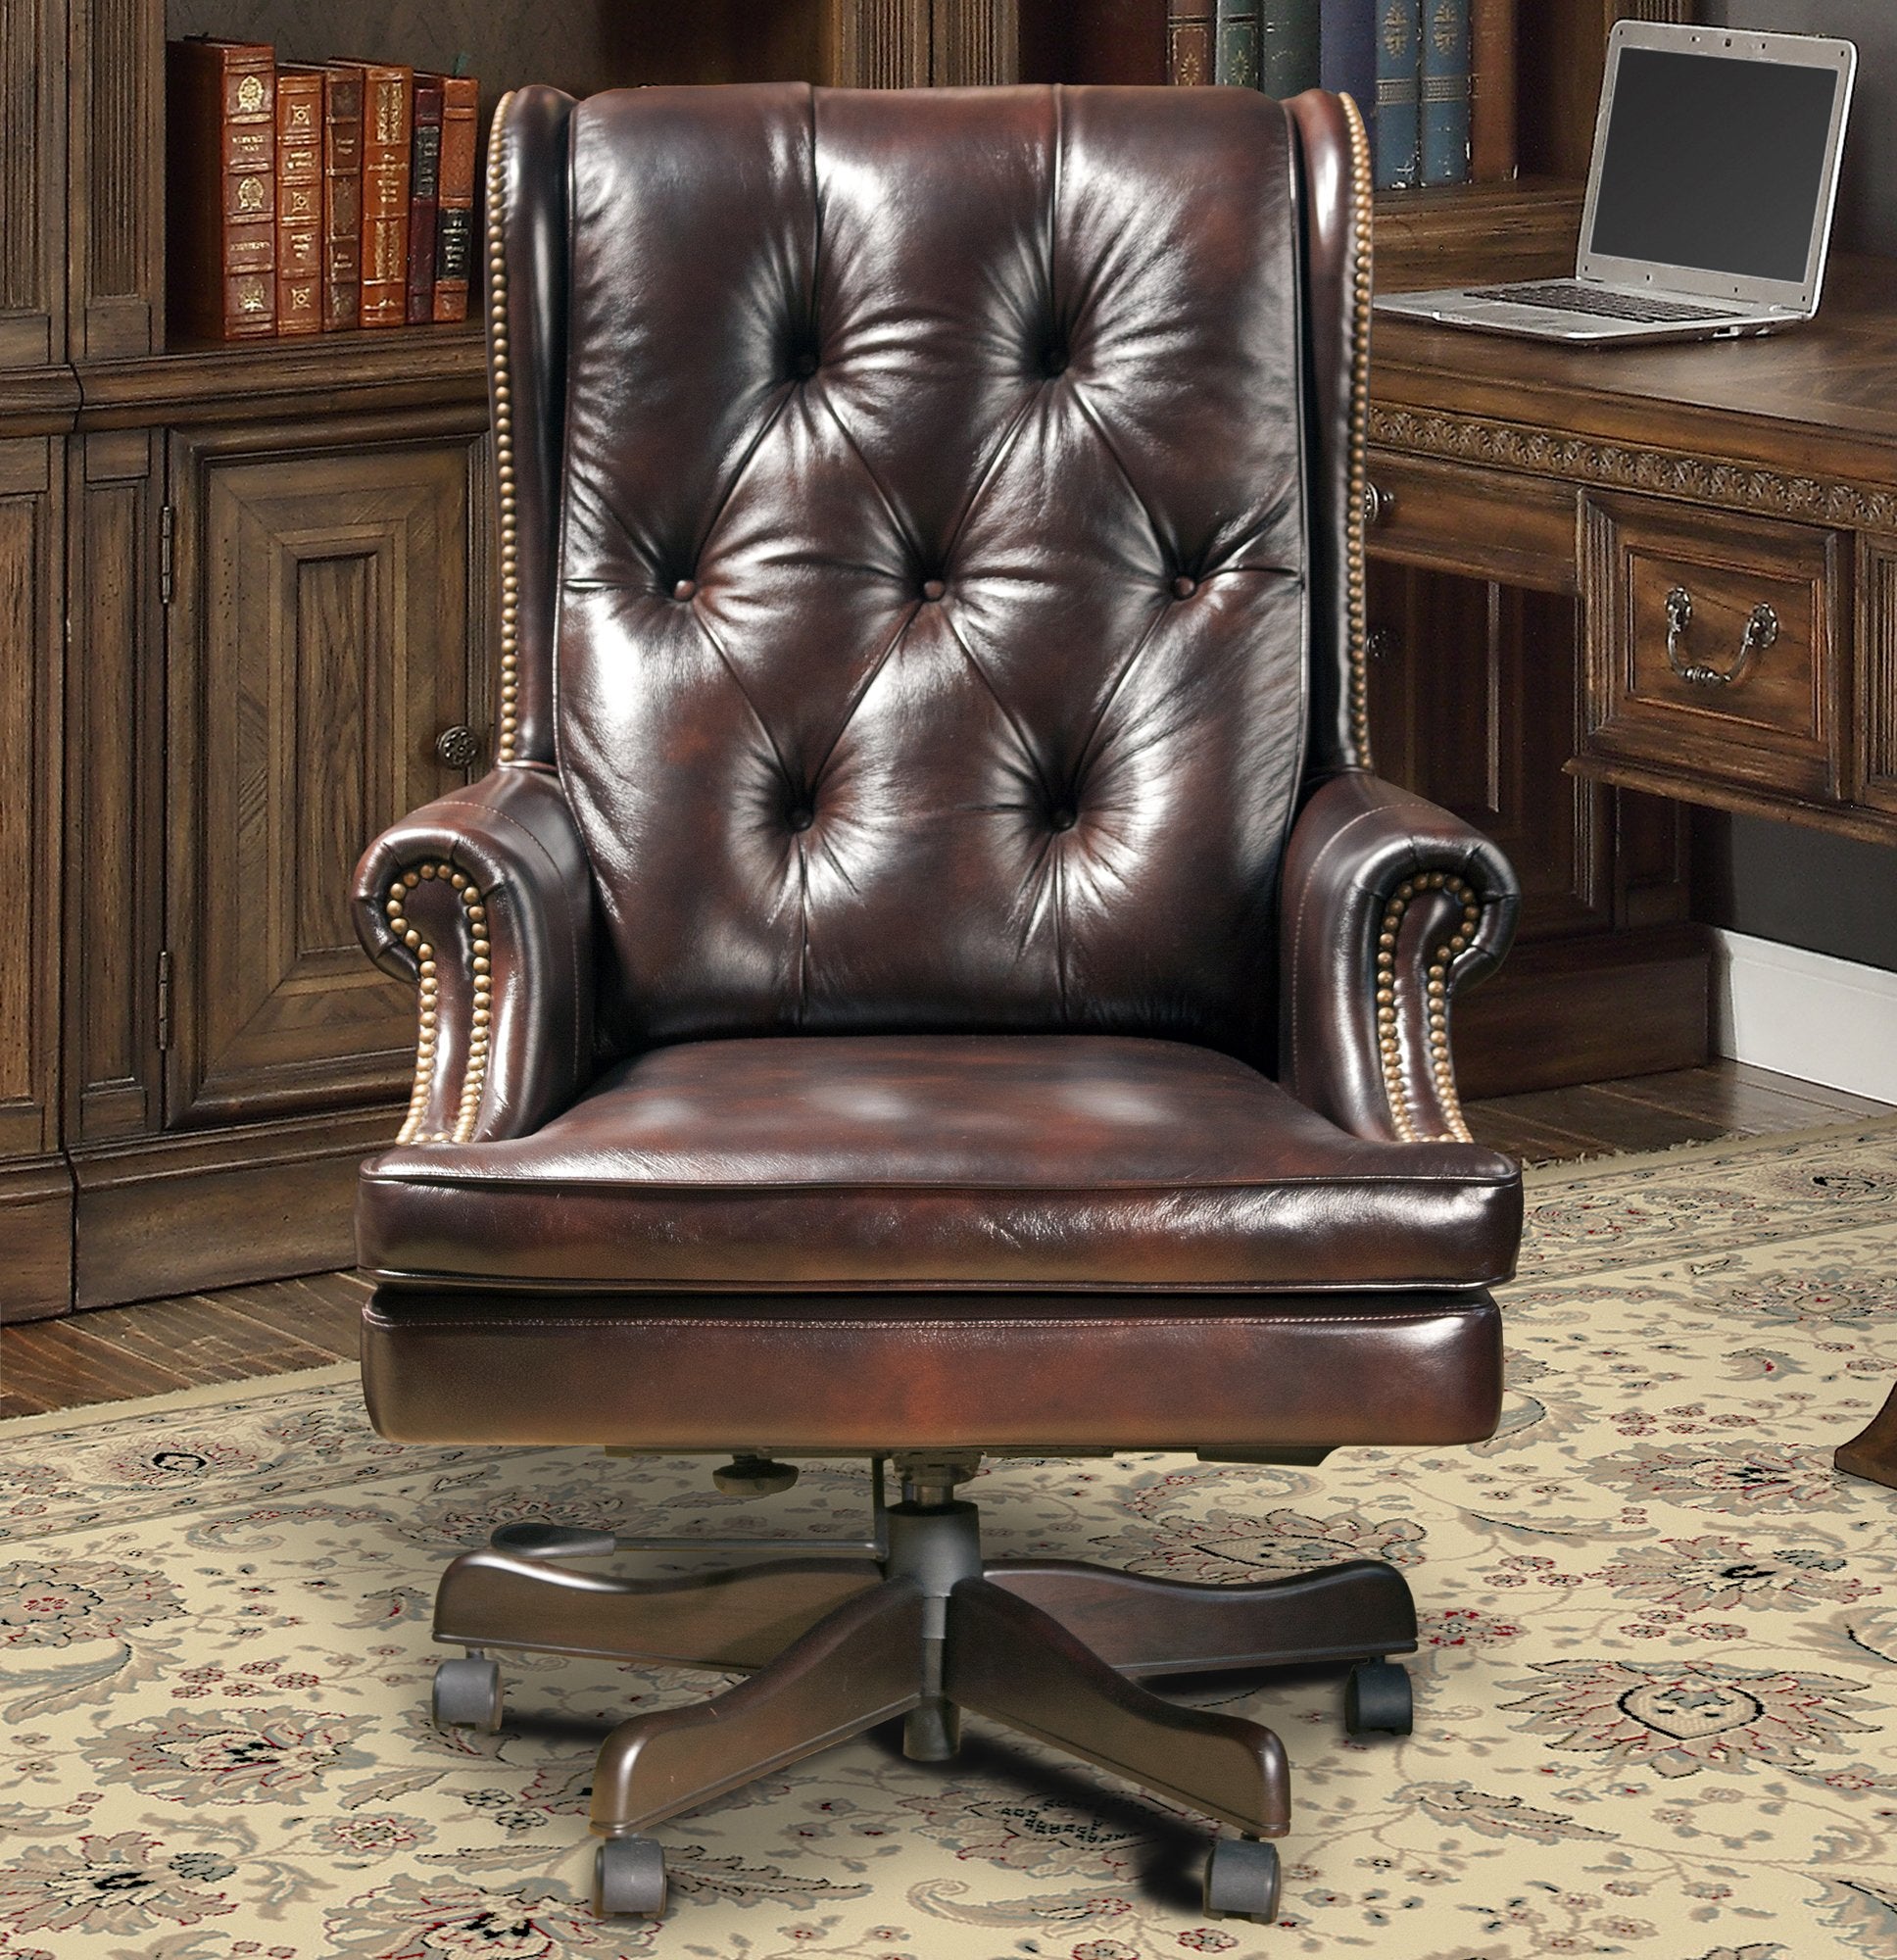 DC#112-HA - DESK CHAIR Leather Desk Chair - Parker House Furniture